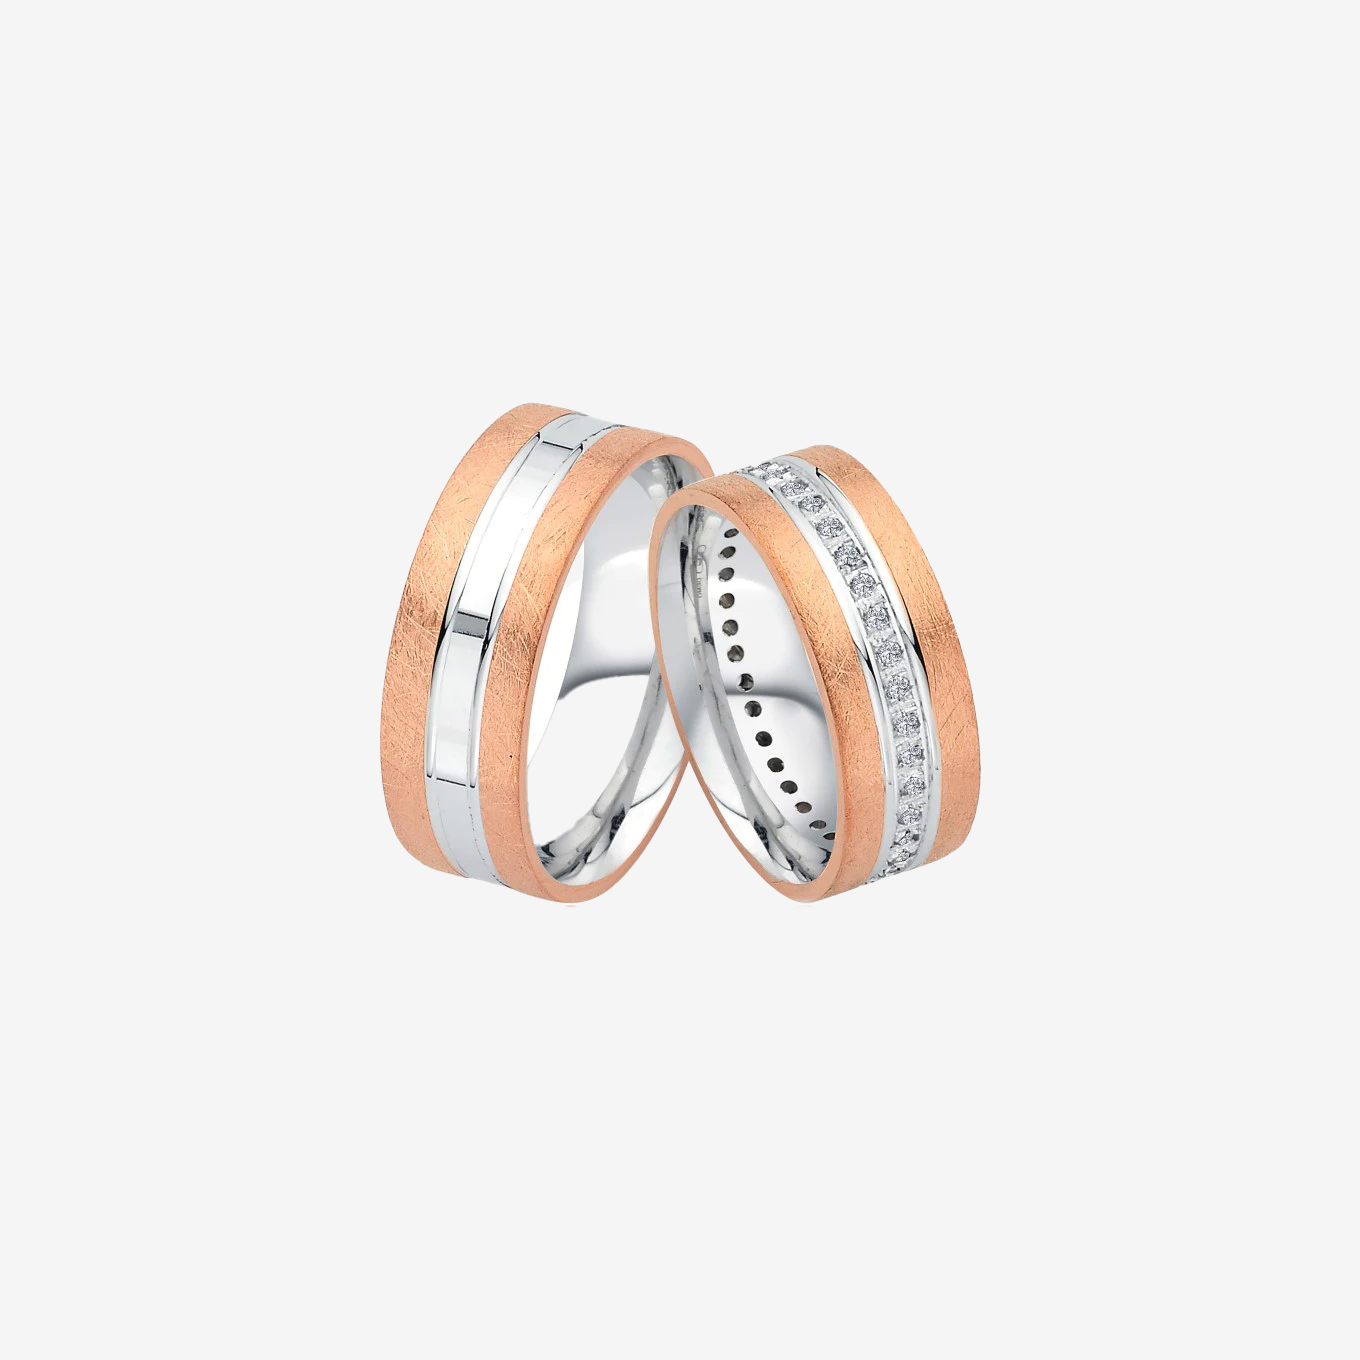 Rhea Diamond Wedding Rings - White and Pink Gold - Pair